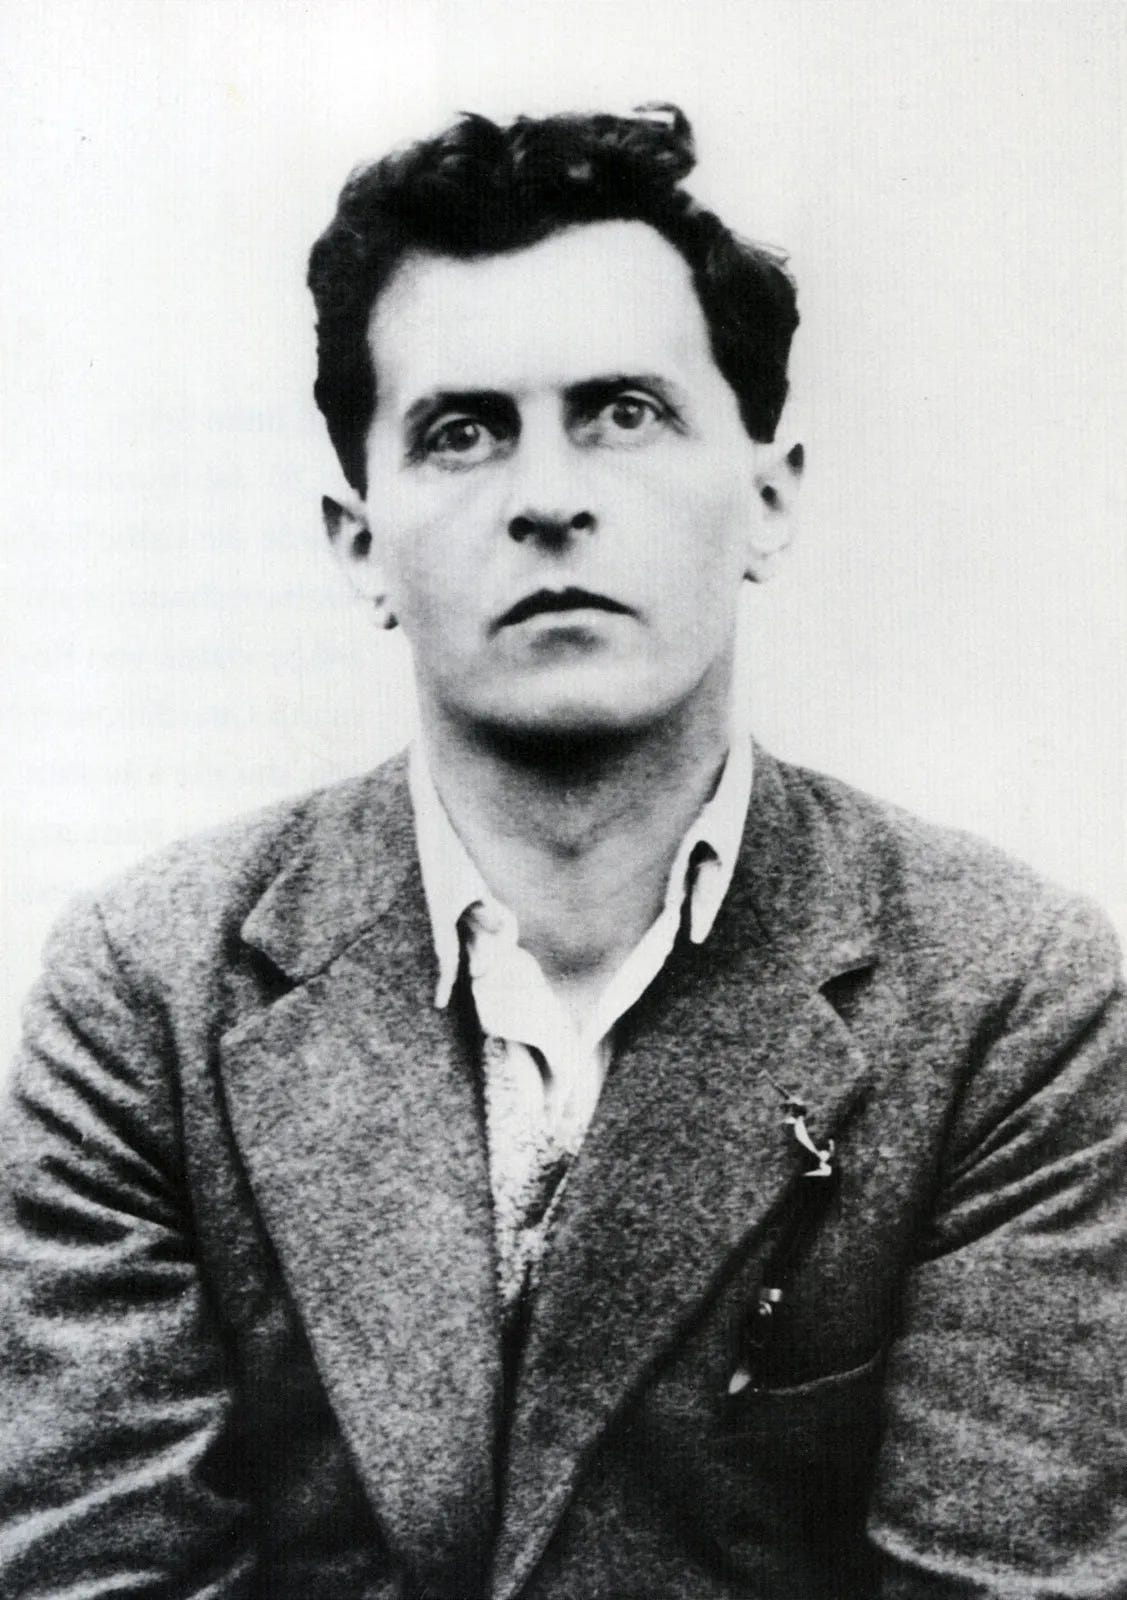 A black and white photo of Wittgenstein.